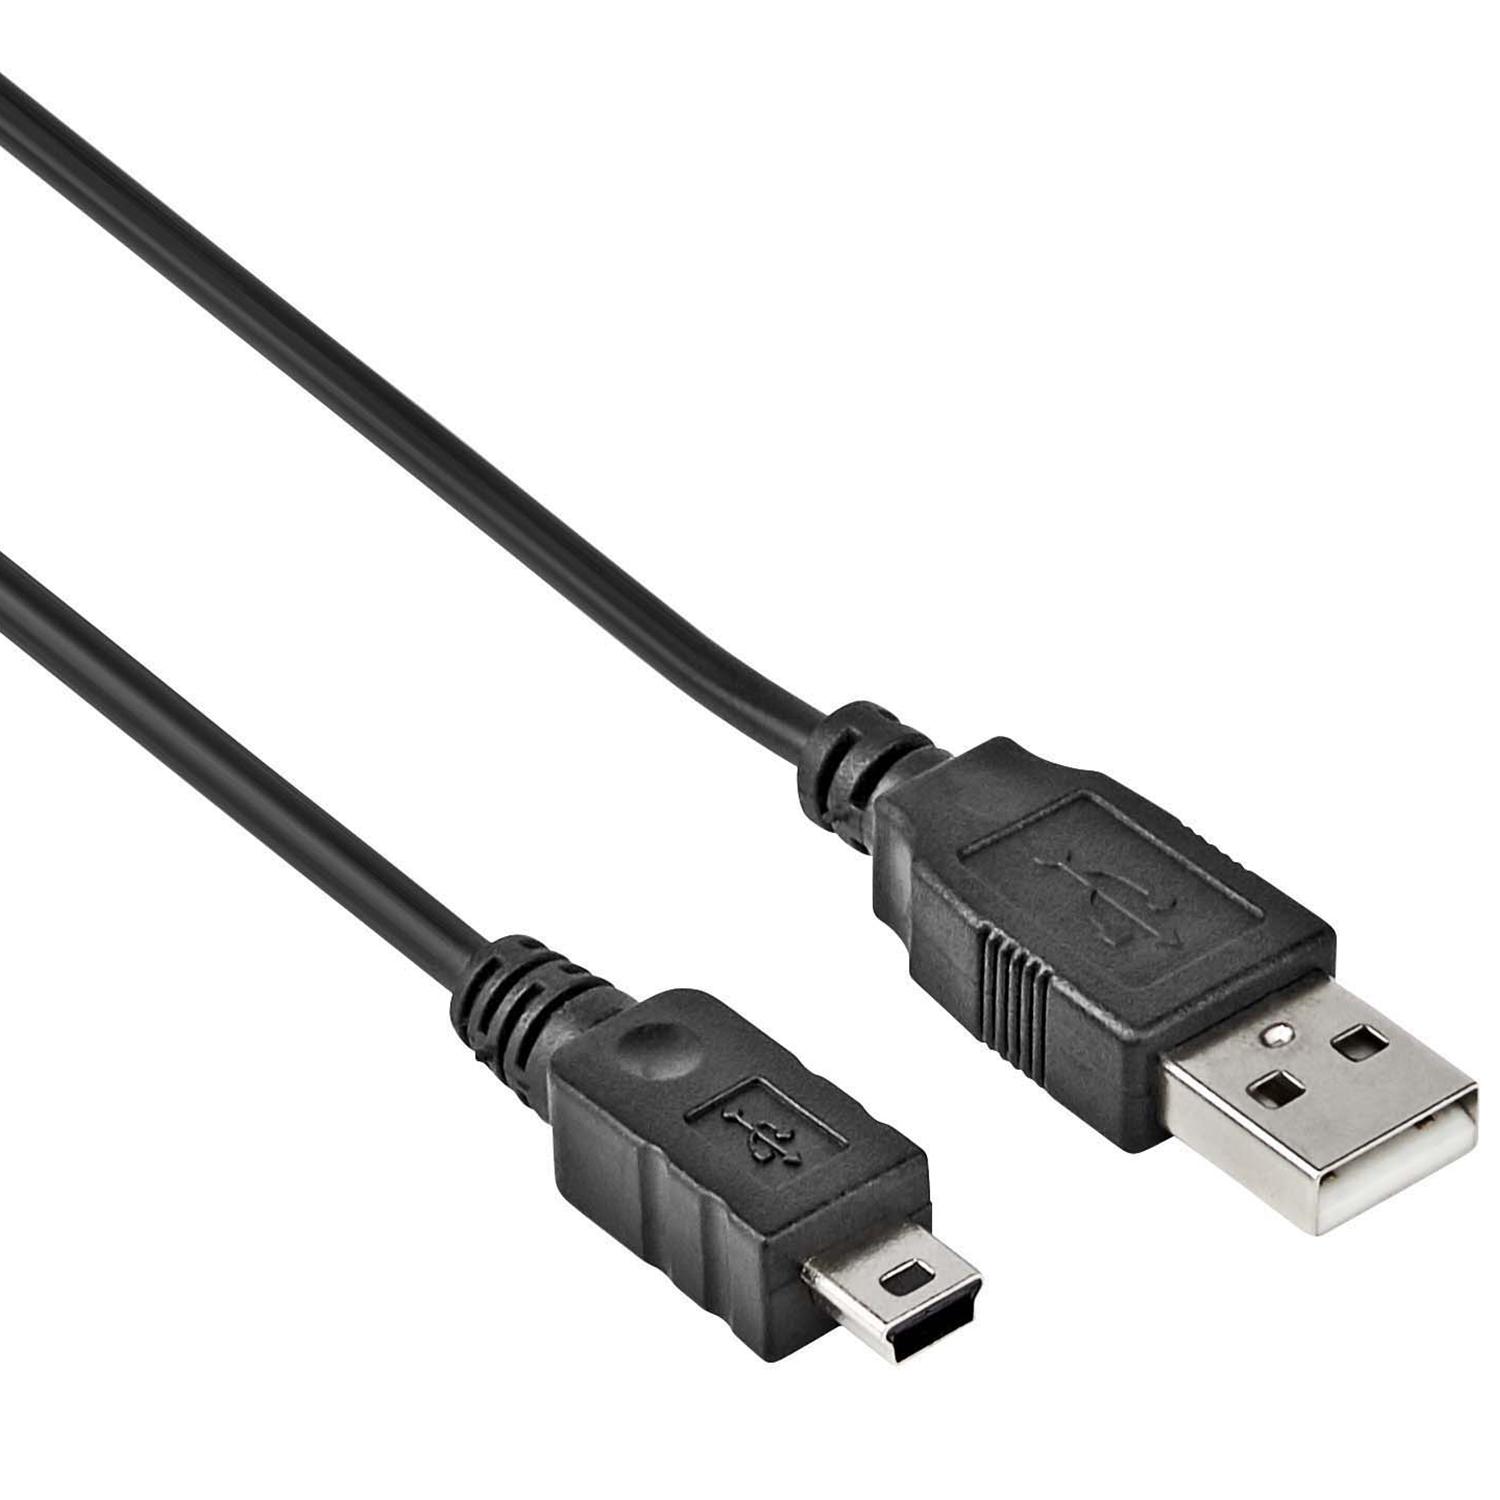 Onzin Hoge blootstelling Decoderen Mini USB Kabel - Versie: 2.0 - HighSpeed, Aansluiting 1: USB A male,  Aansluiting 2: Mini USB male, Lengte: 1 meter.